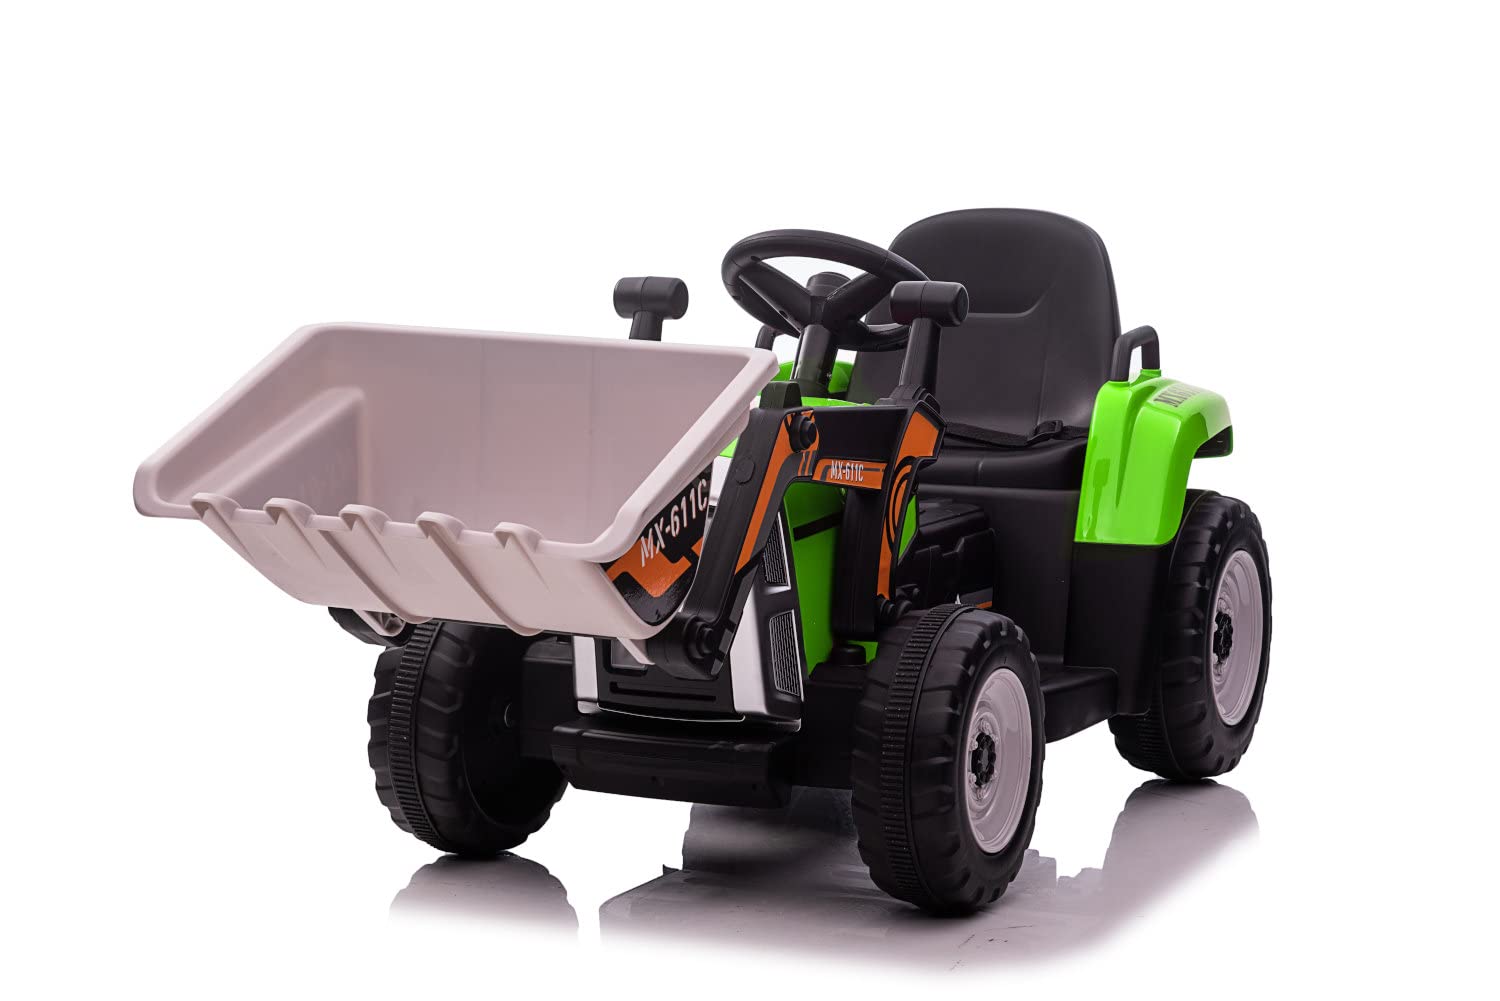 Kinderfahrzeug - Elektro Auto Bagger mit Fernsteuerung - 12V7A Akku,2 Motoren (Green)